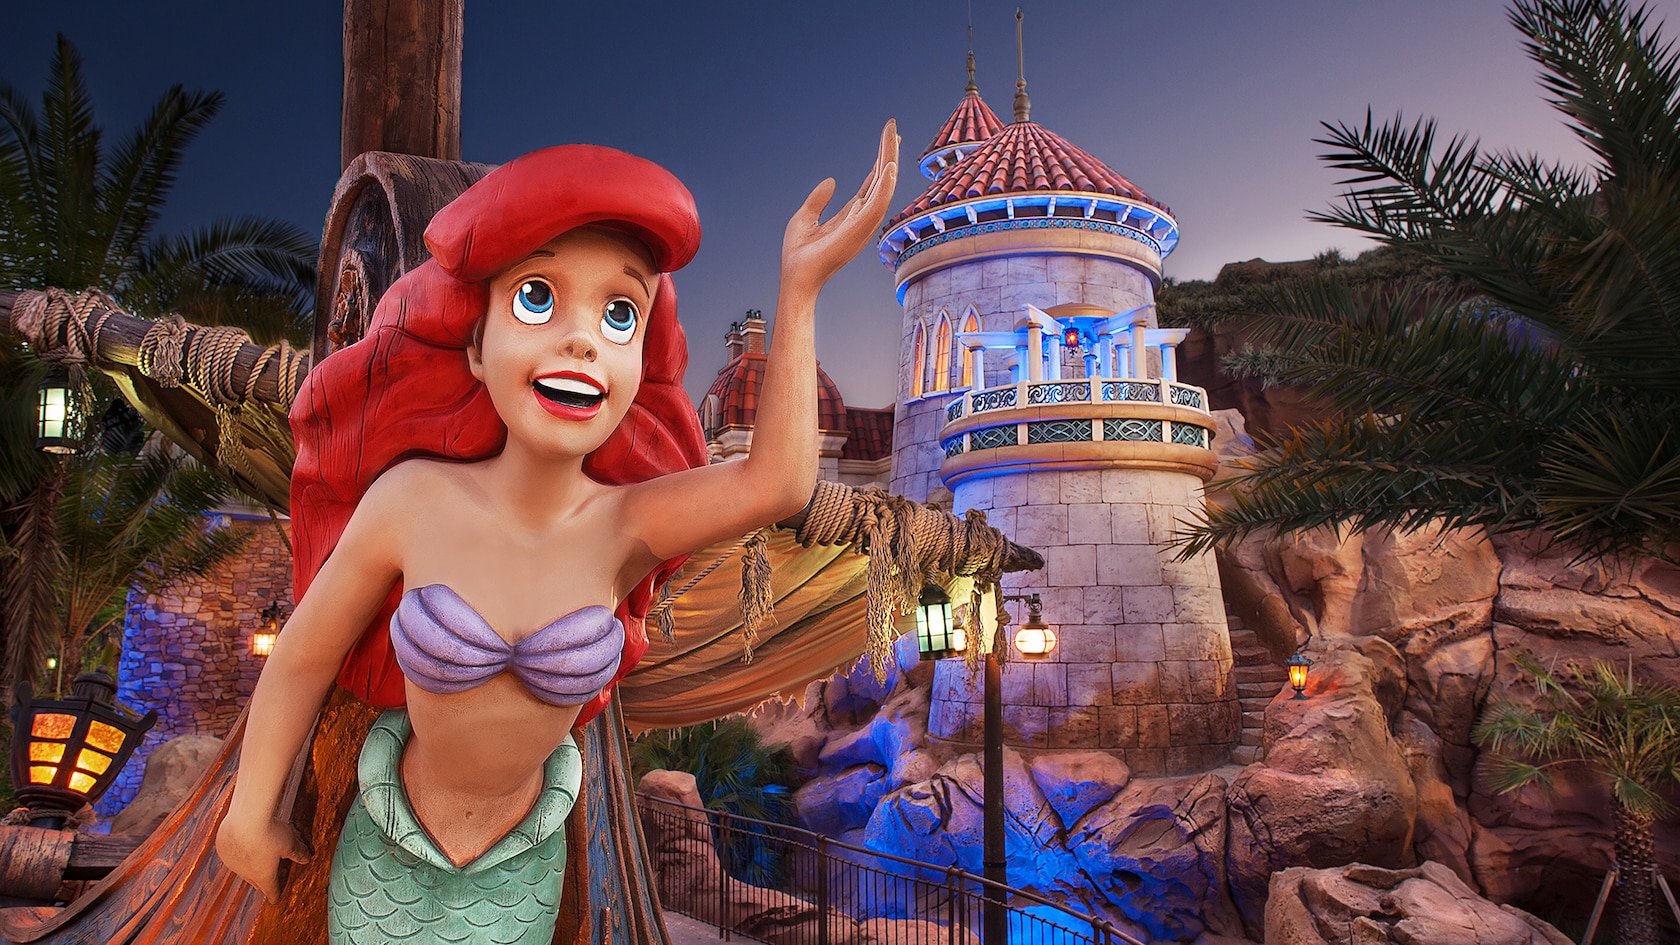 Under The Sea - Journey of the Little Mermaid | Magic Kingdom Attractions | Walt Disney World Resort